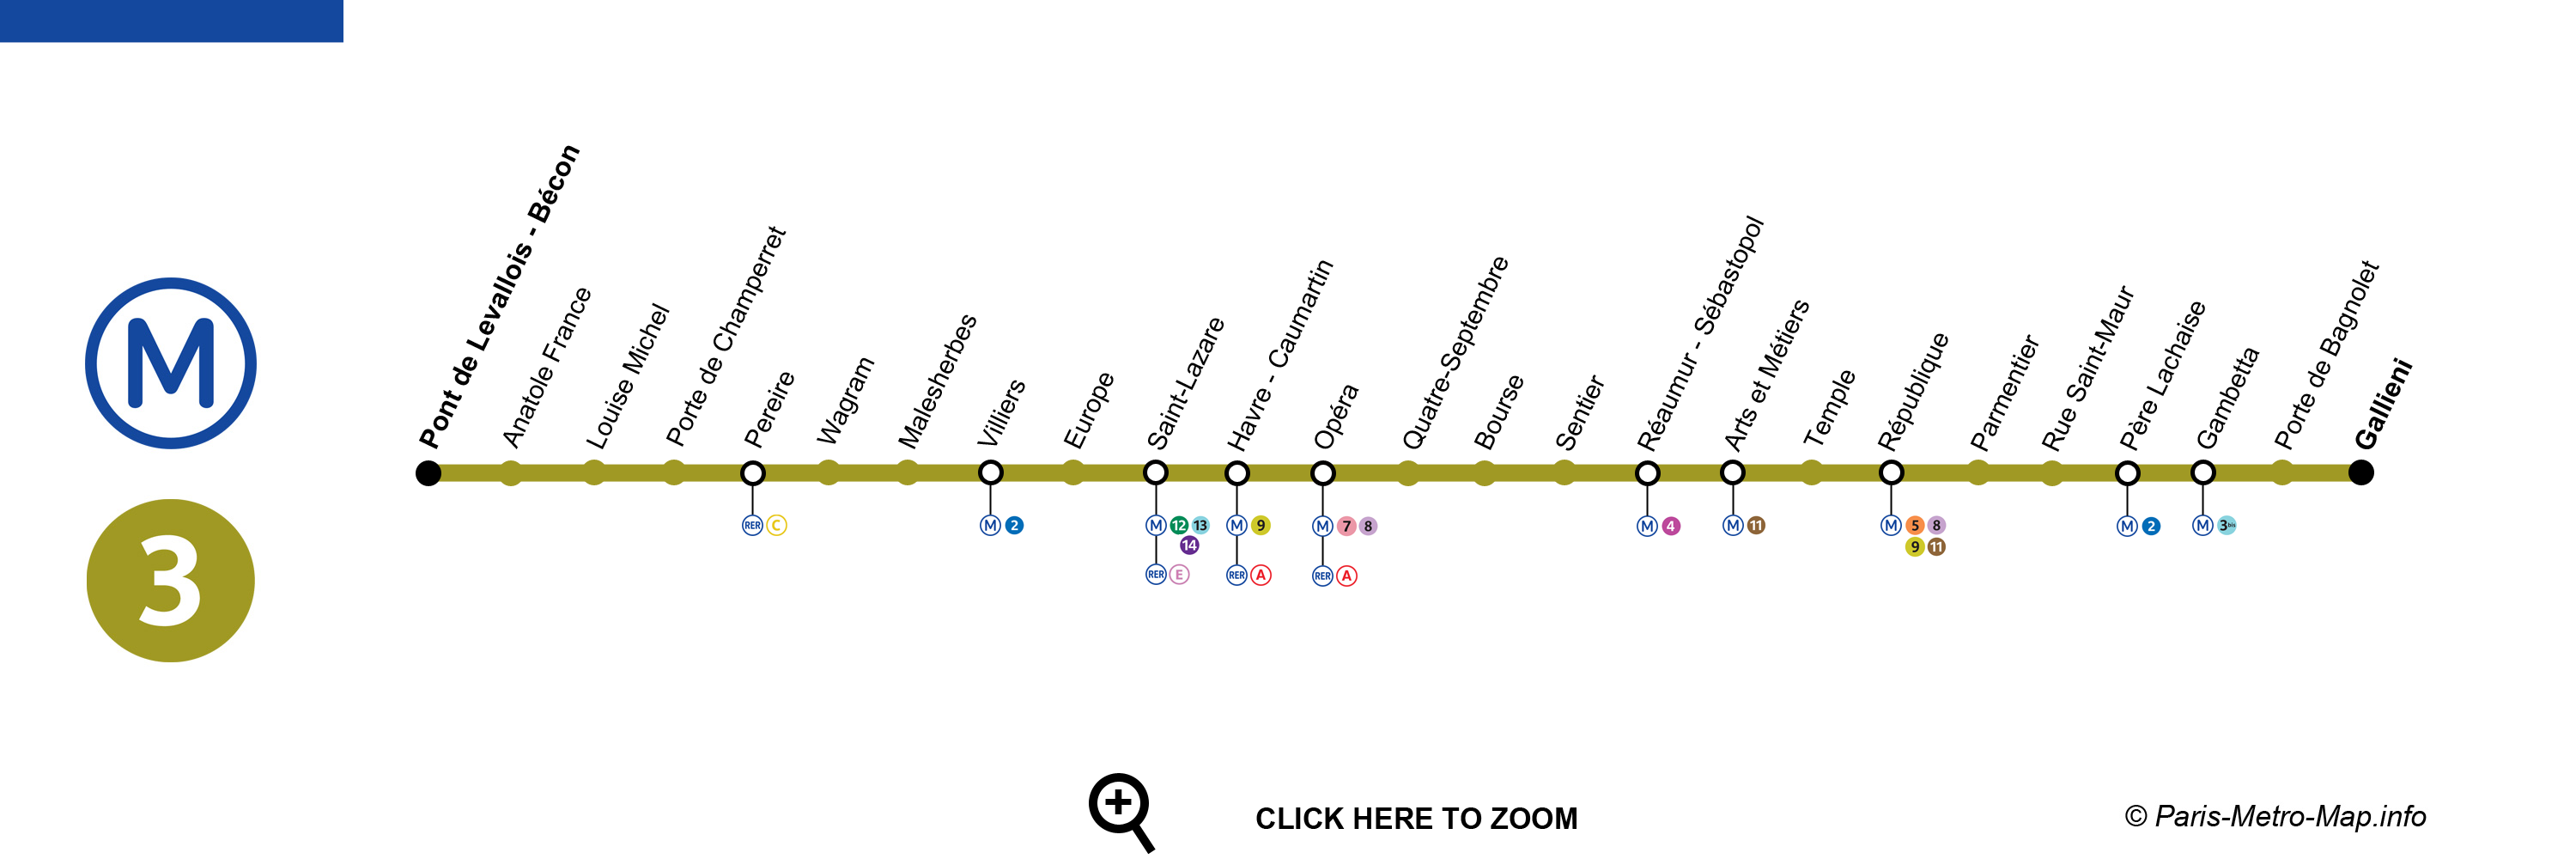 Paris Metro Line 3 Map Schedule Ticket Stations Tourist Info